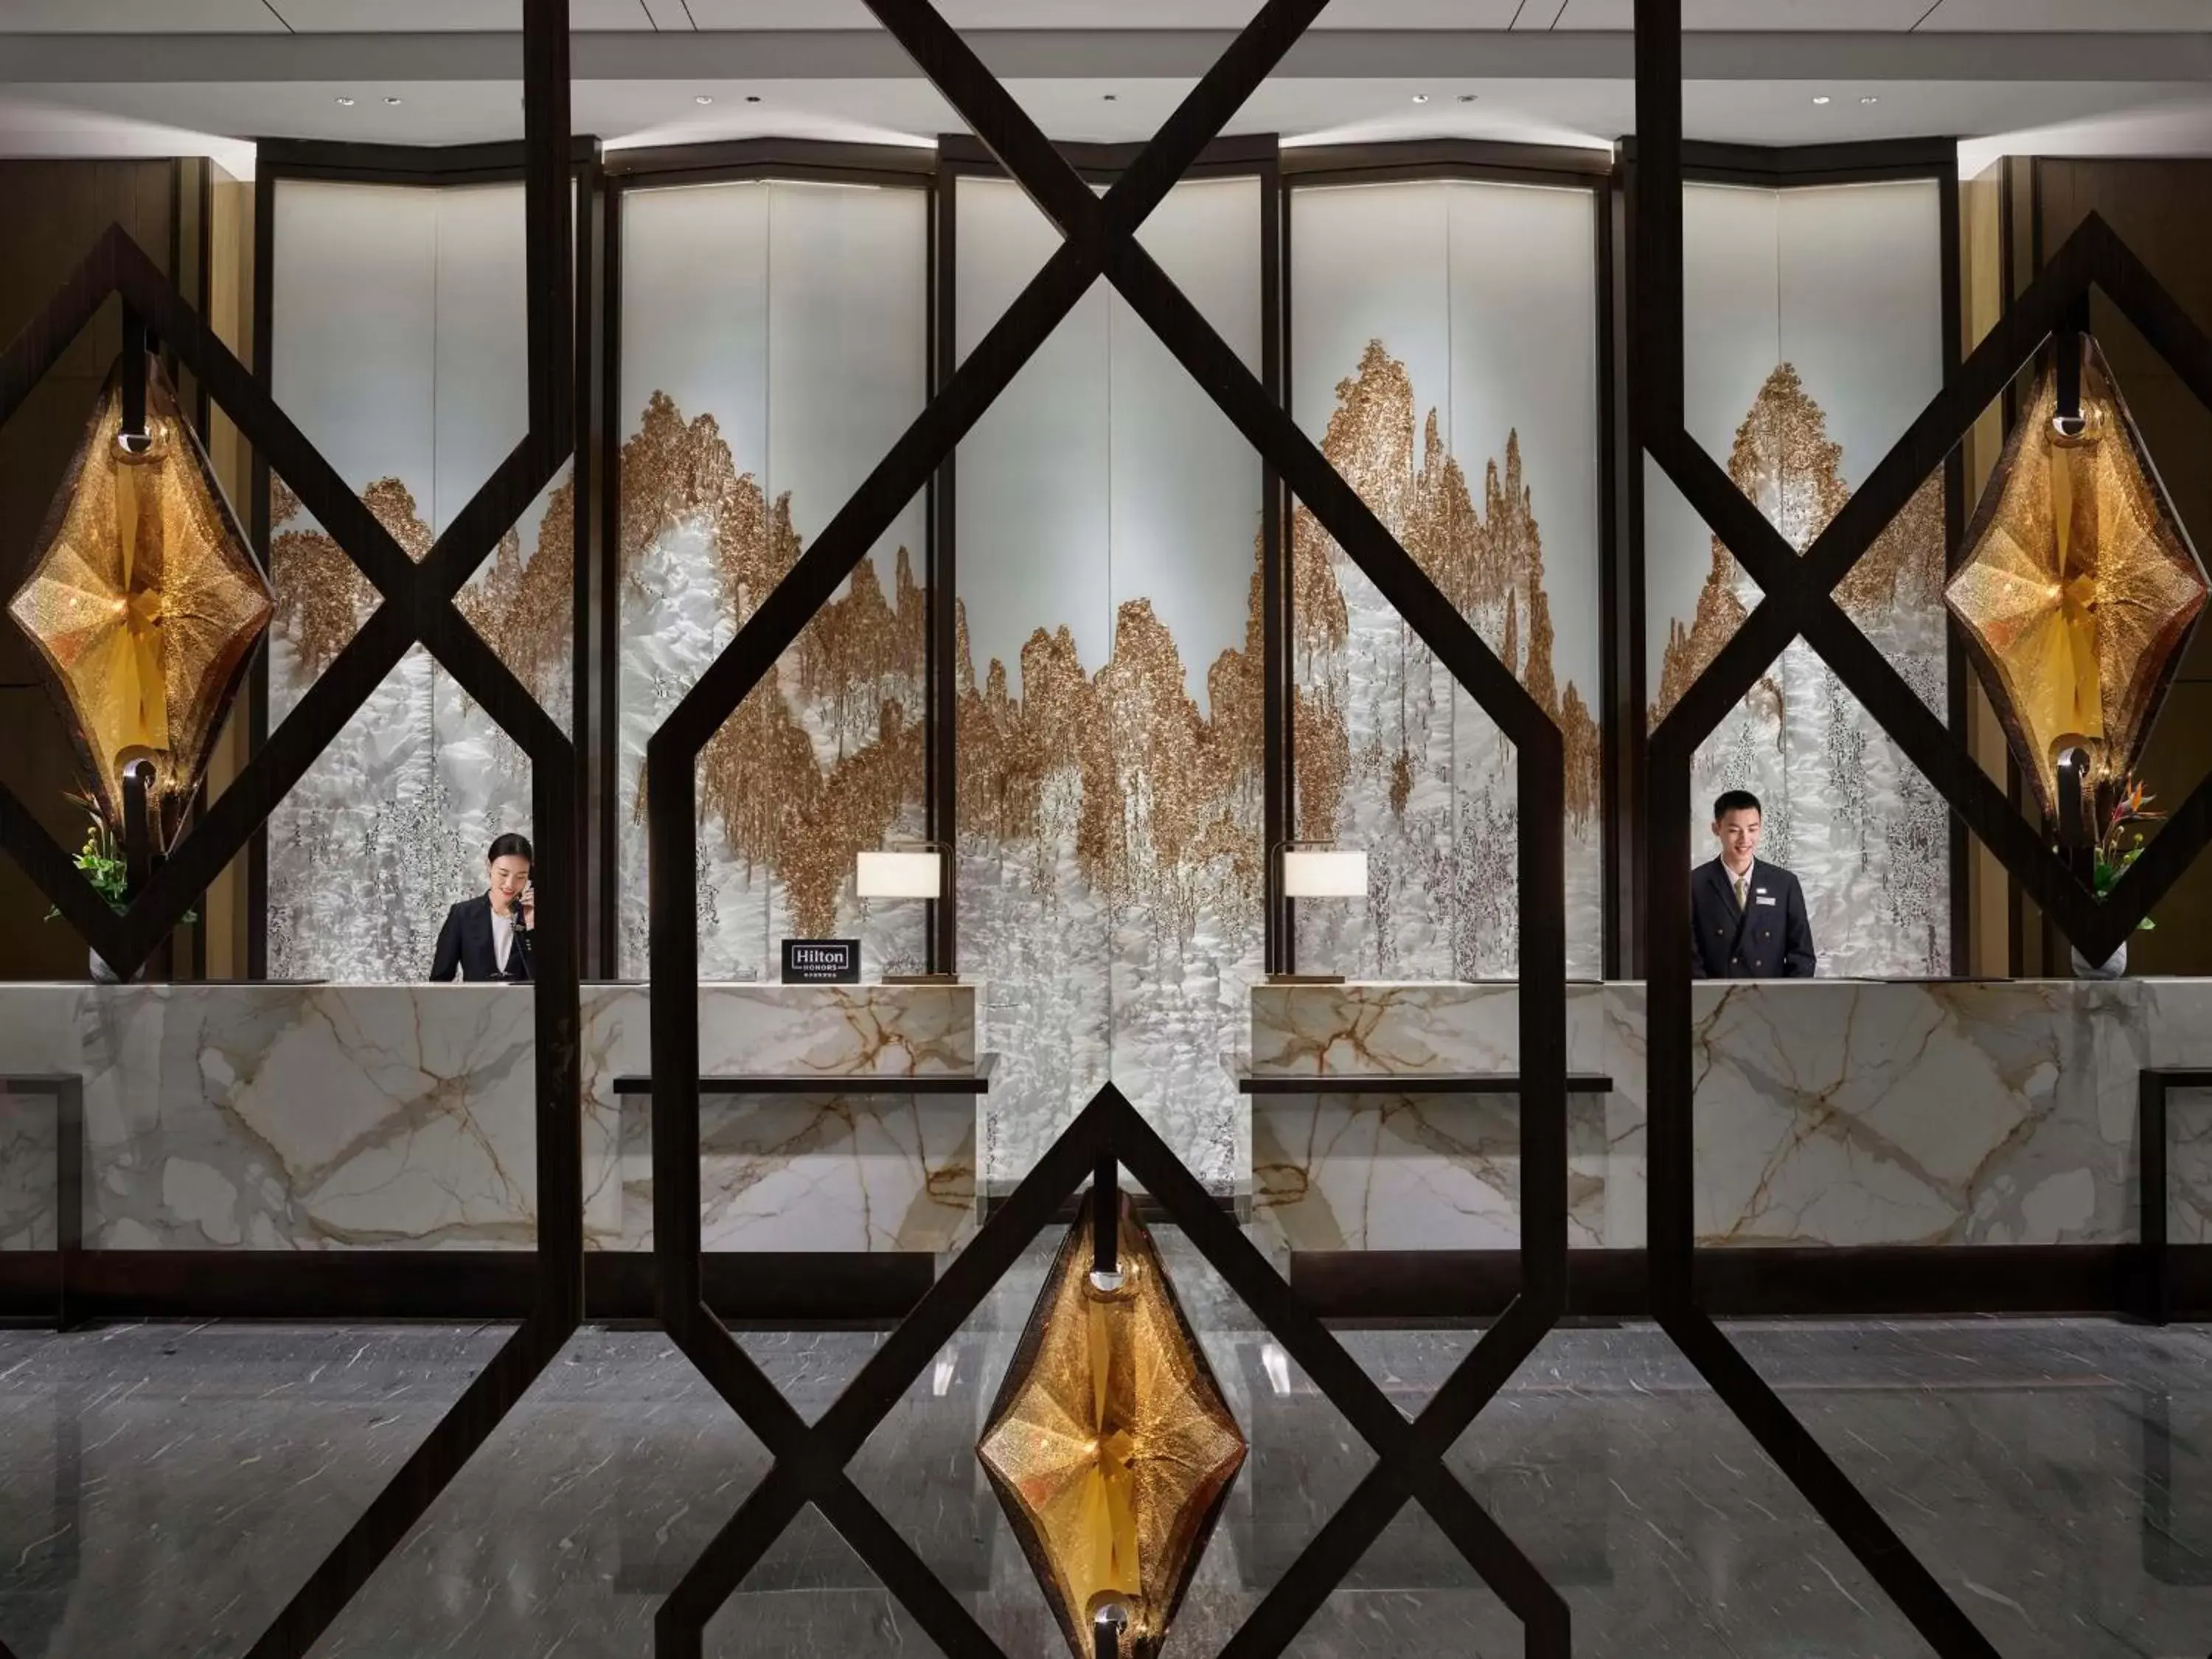 Lobby or reception in Hilton Foshan Shunde